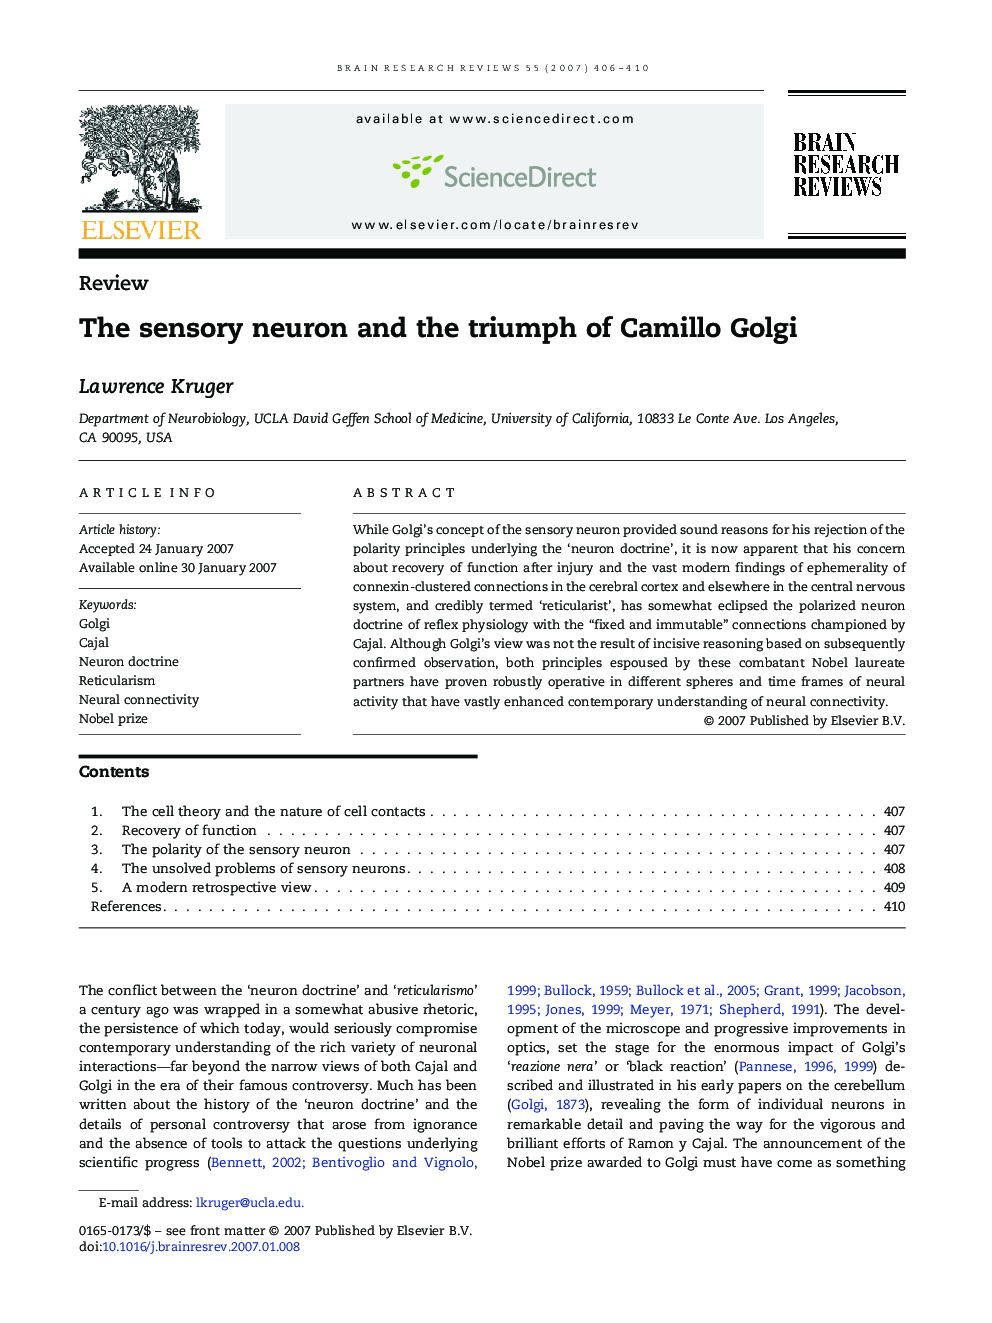 The sensory neuron and the triumph of Camillo Golgi